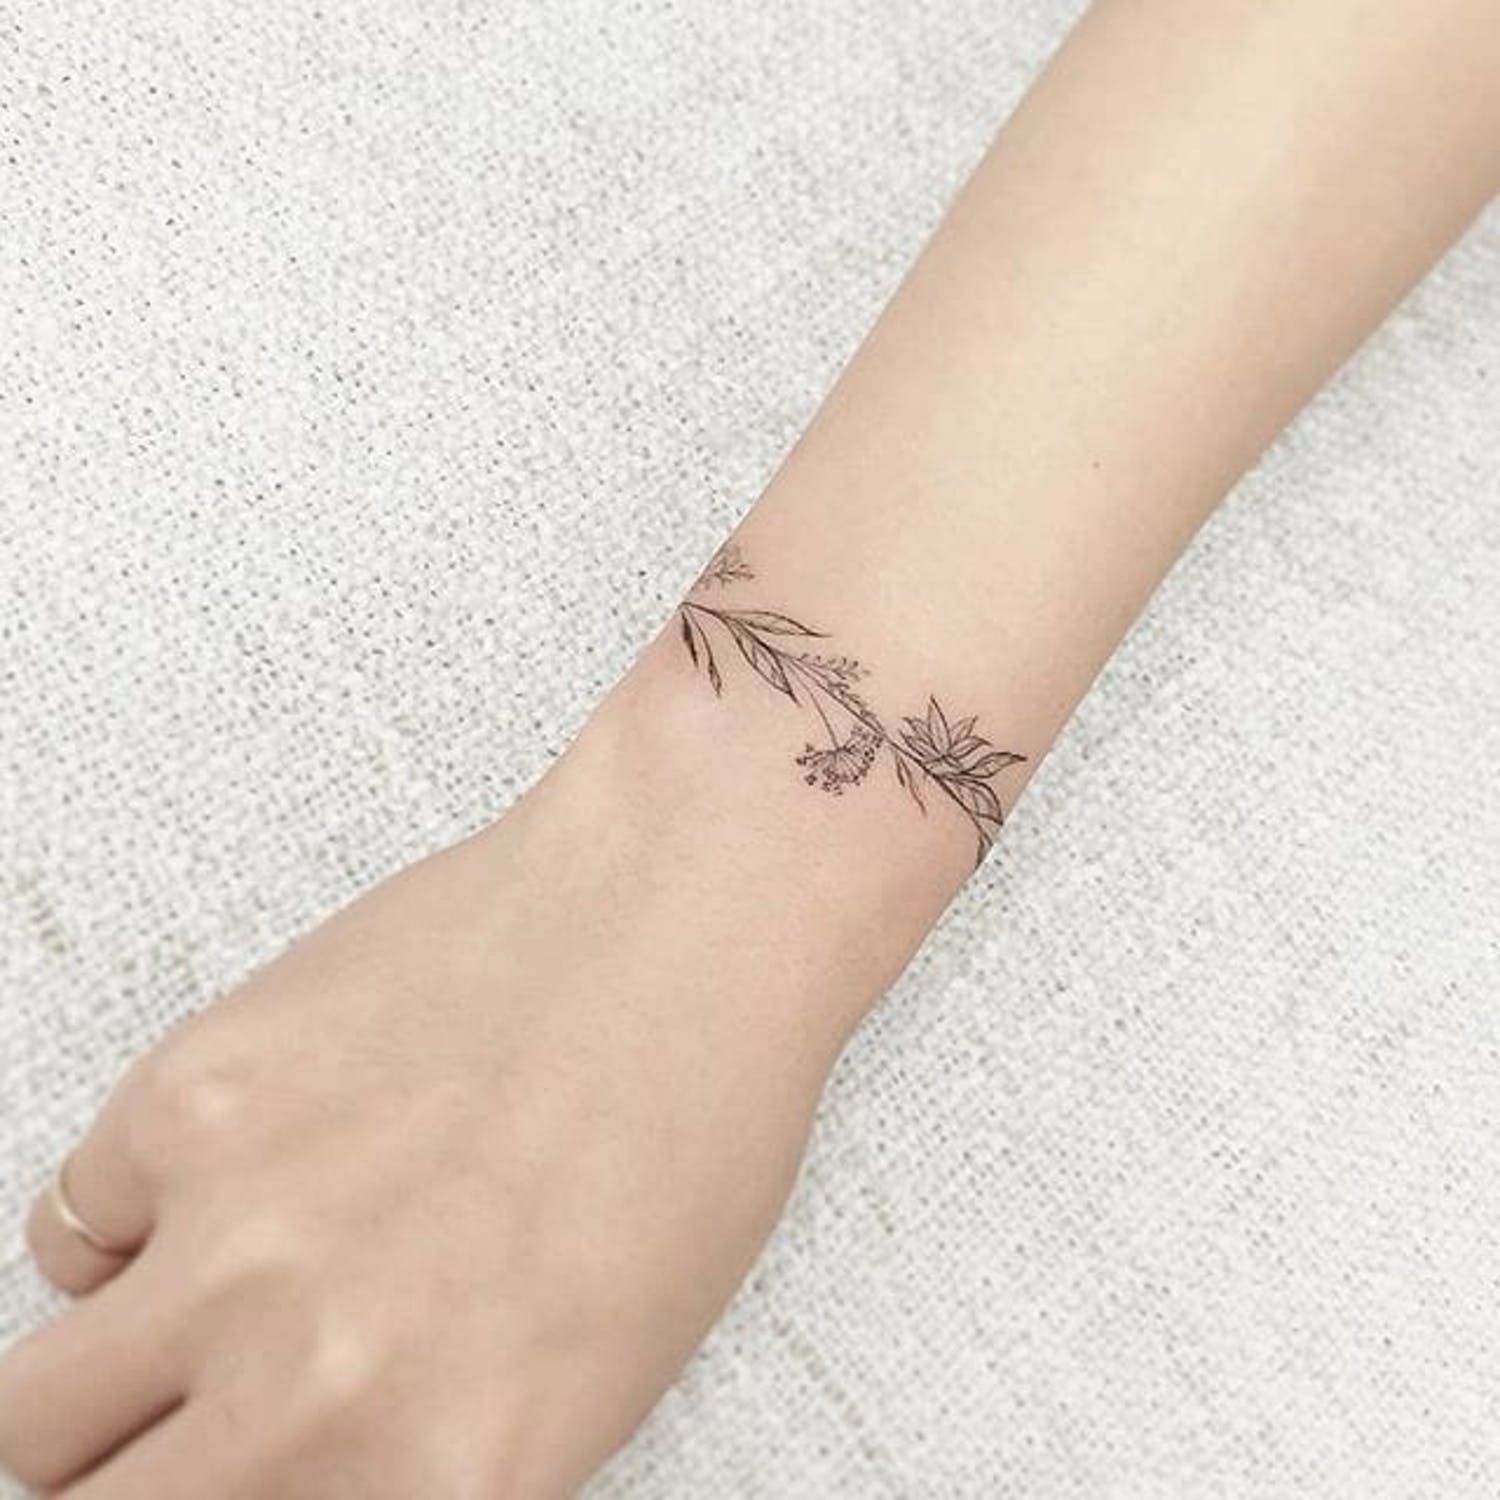 bracelet tattoo